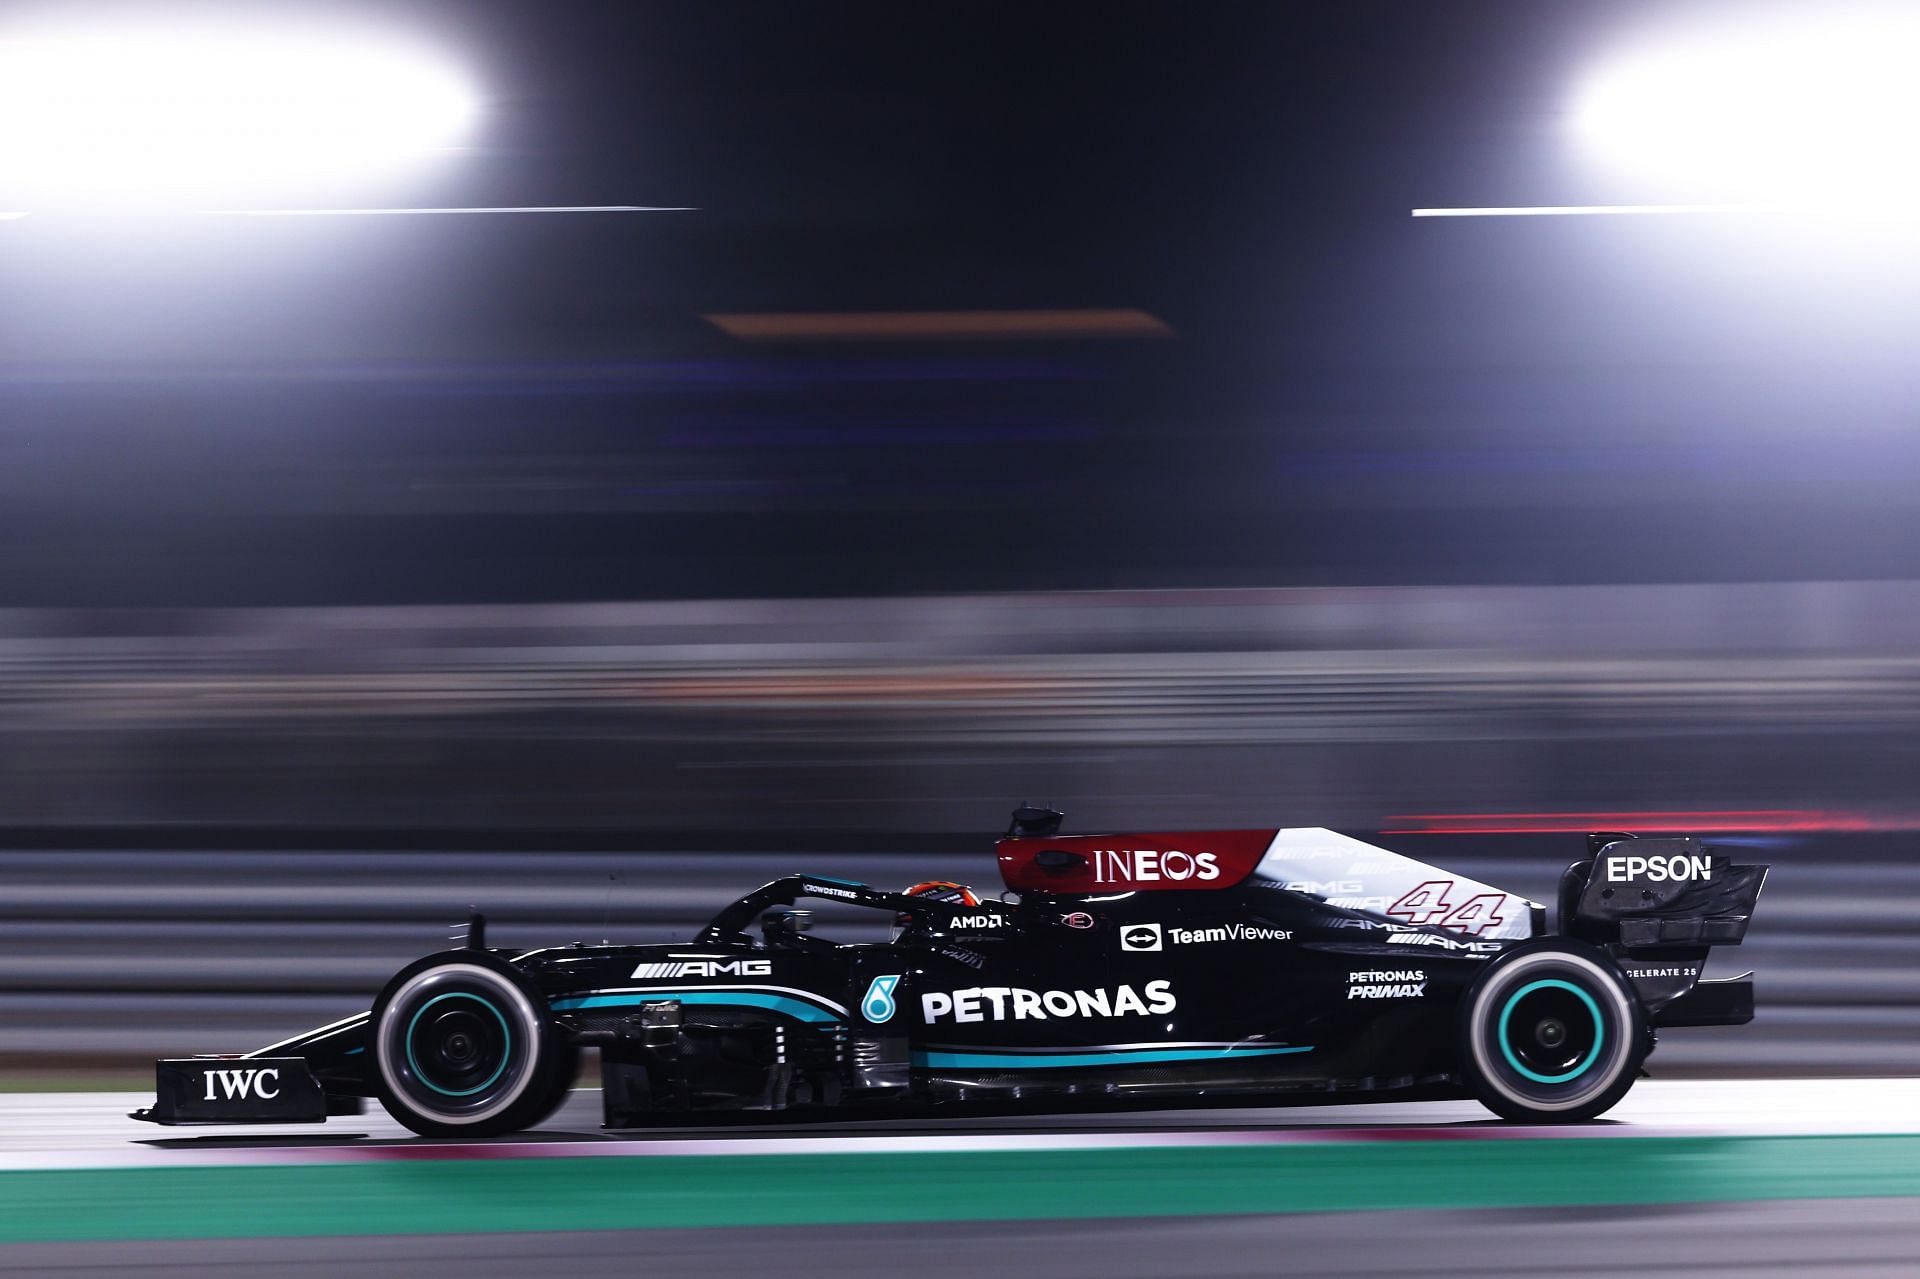 Lewis Hamilton on track during the 2021 Qatar Grand Prix.